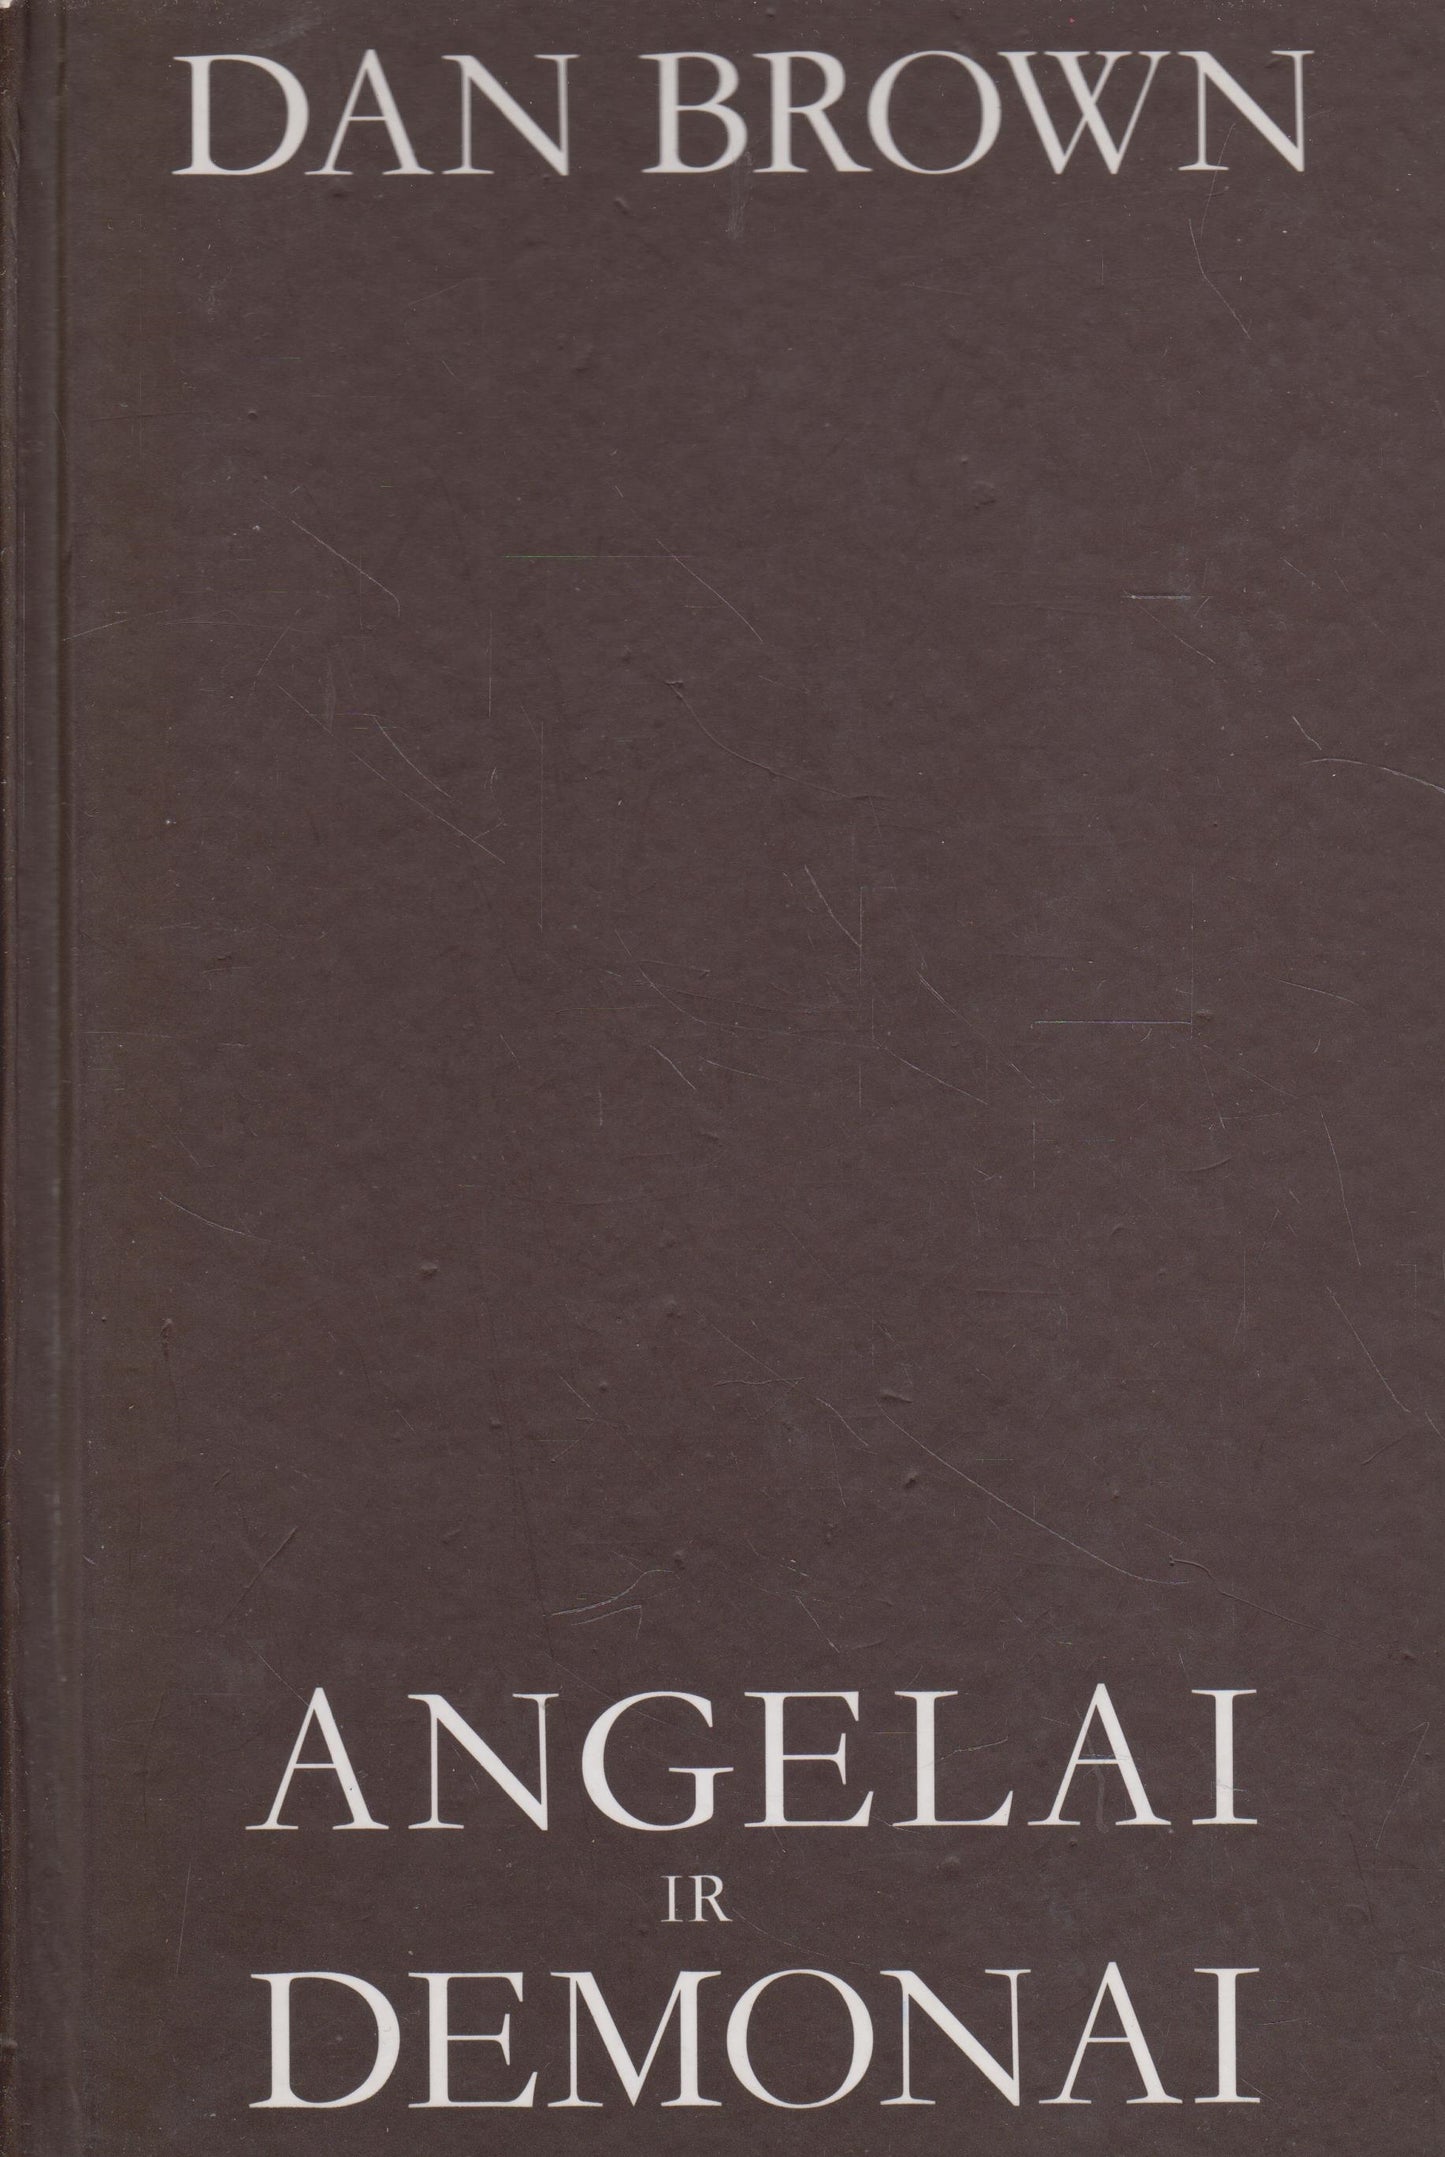 D. Brown - Angelai ir demonai